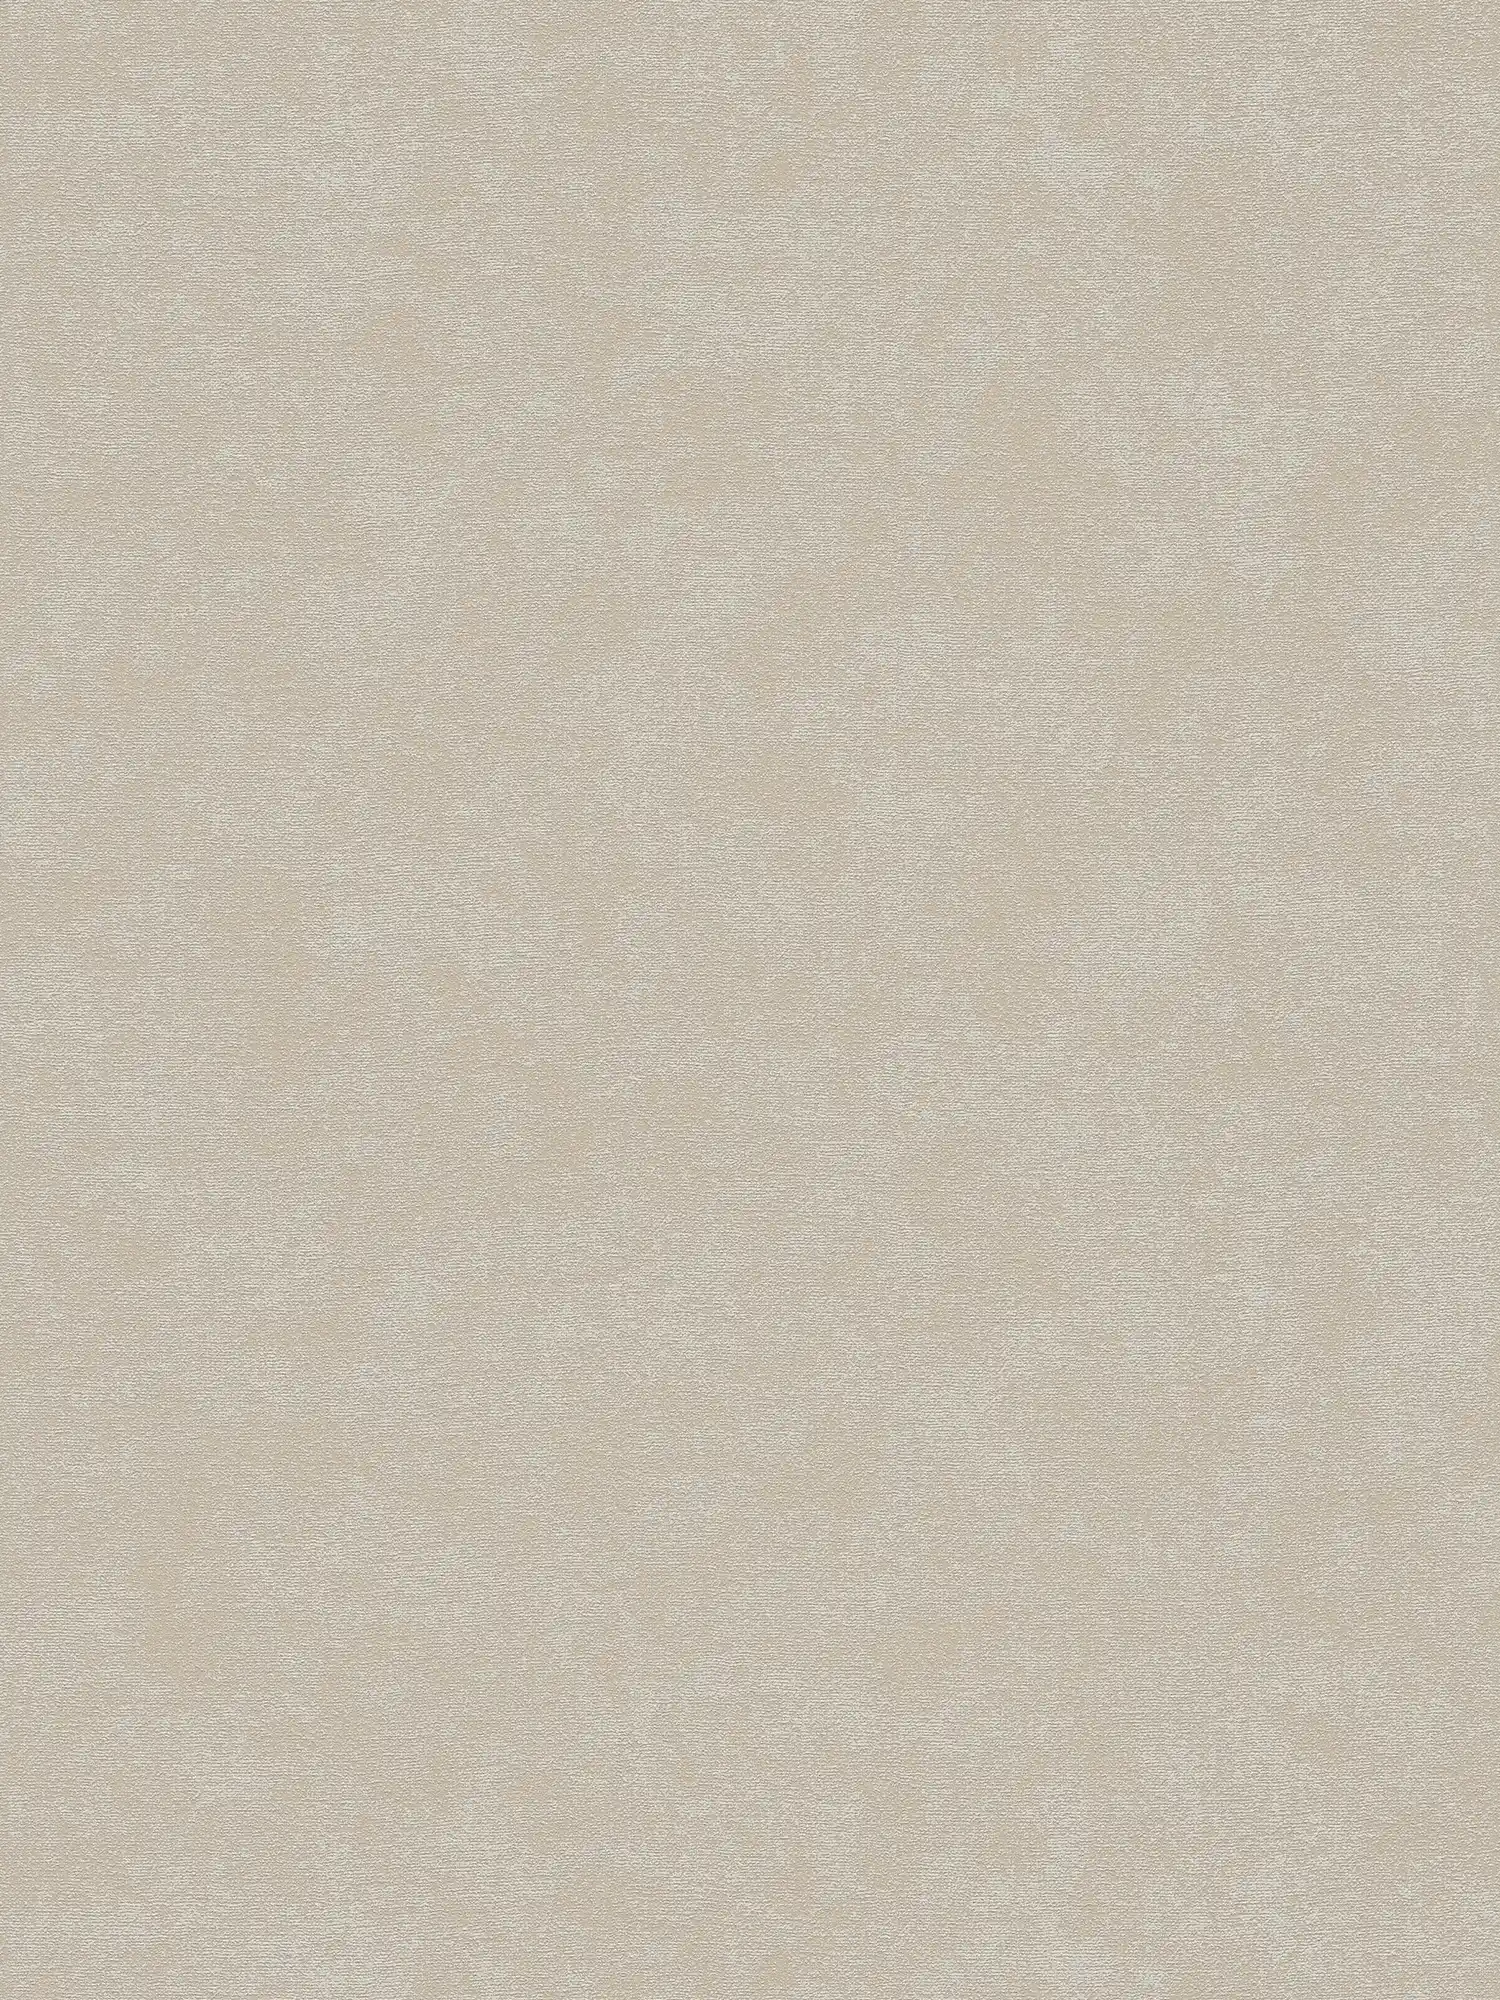 Papel pintado no tejido monocolor de textura ligera - gris, beige
